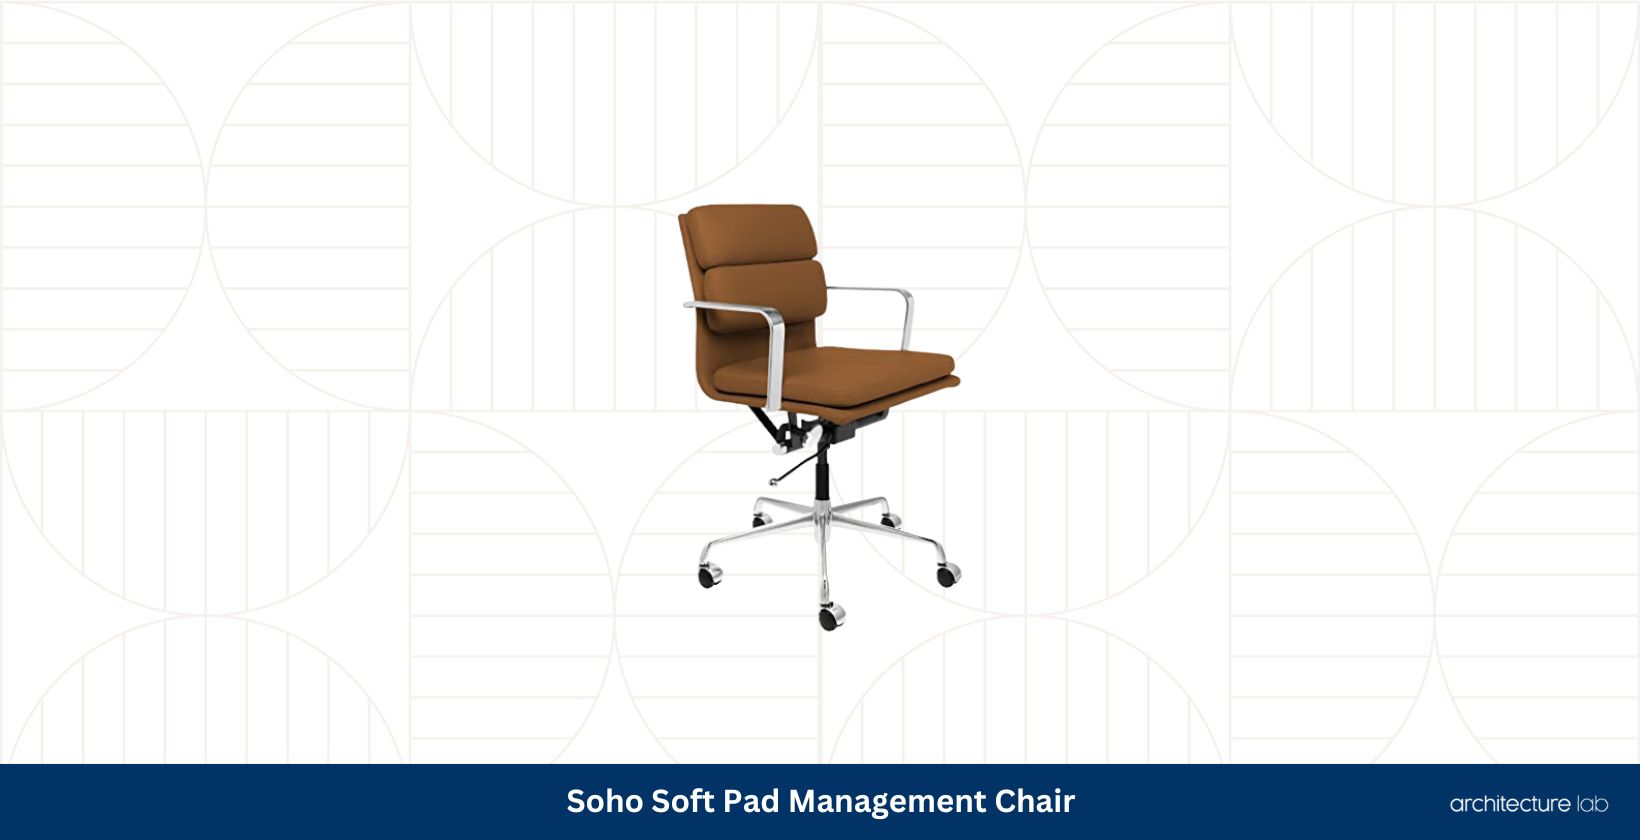 Soho soft pad management chair